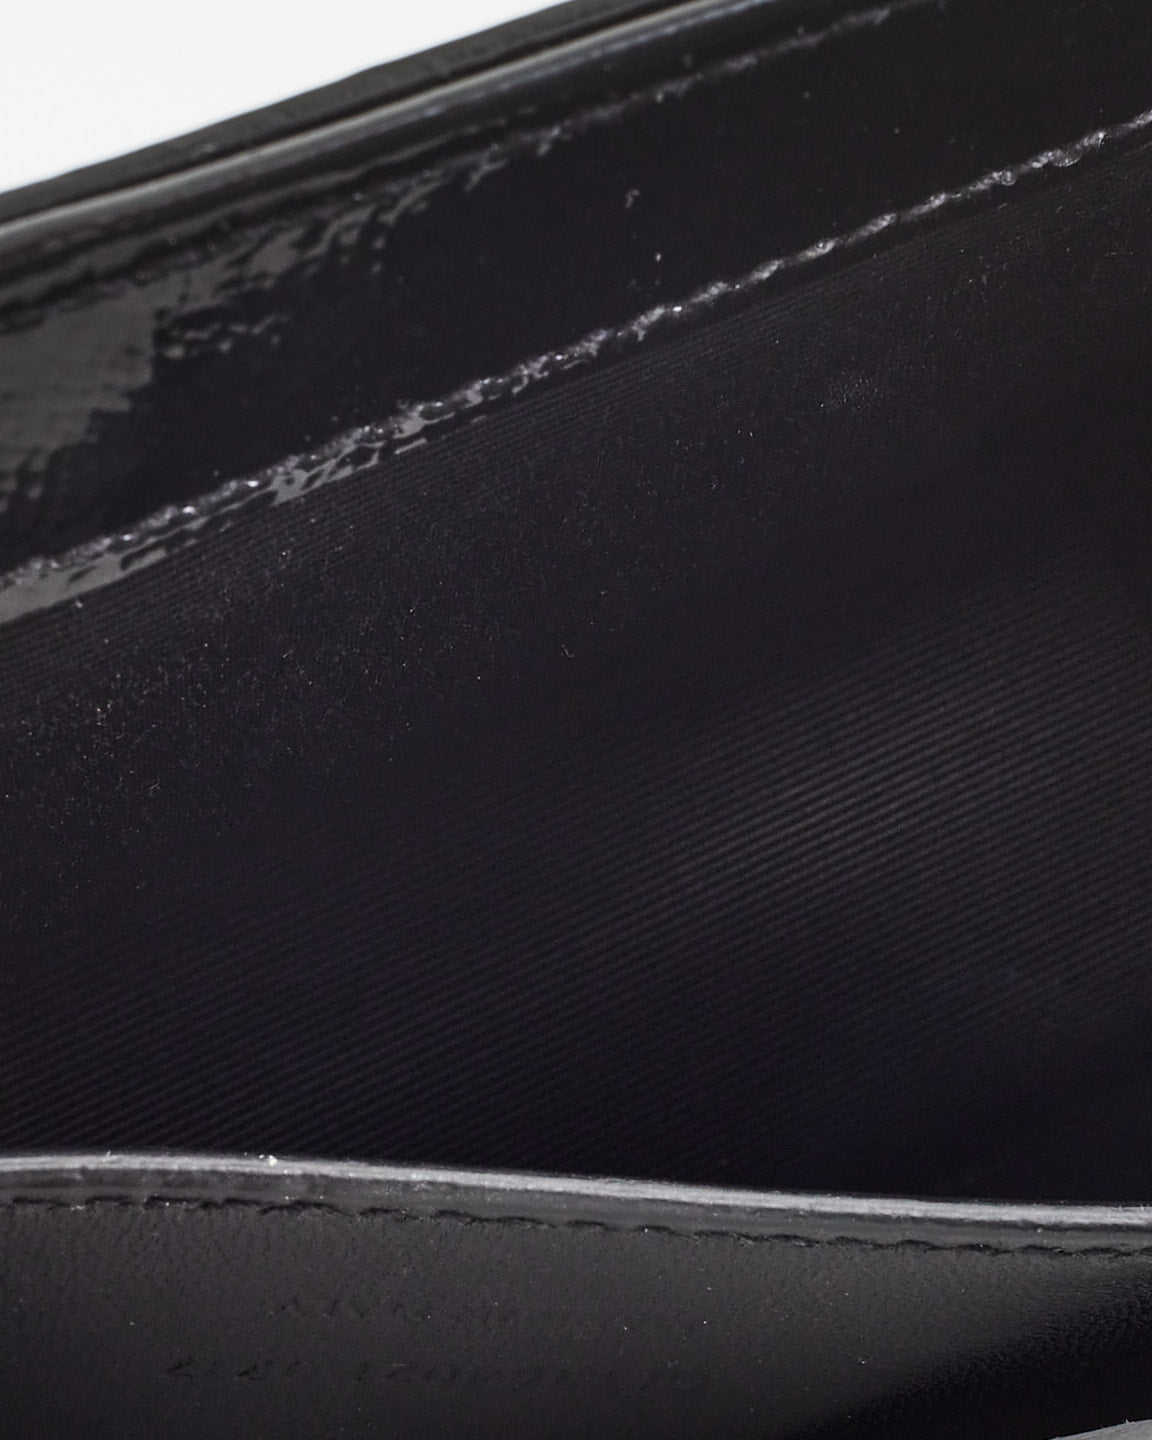 Saint Laurent Black Grained Patent Leather Medium Kate Crossbody Bag